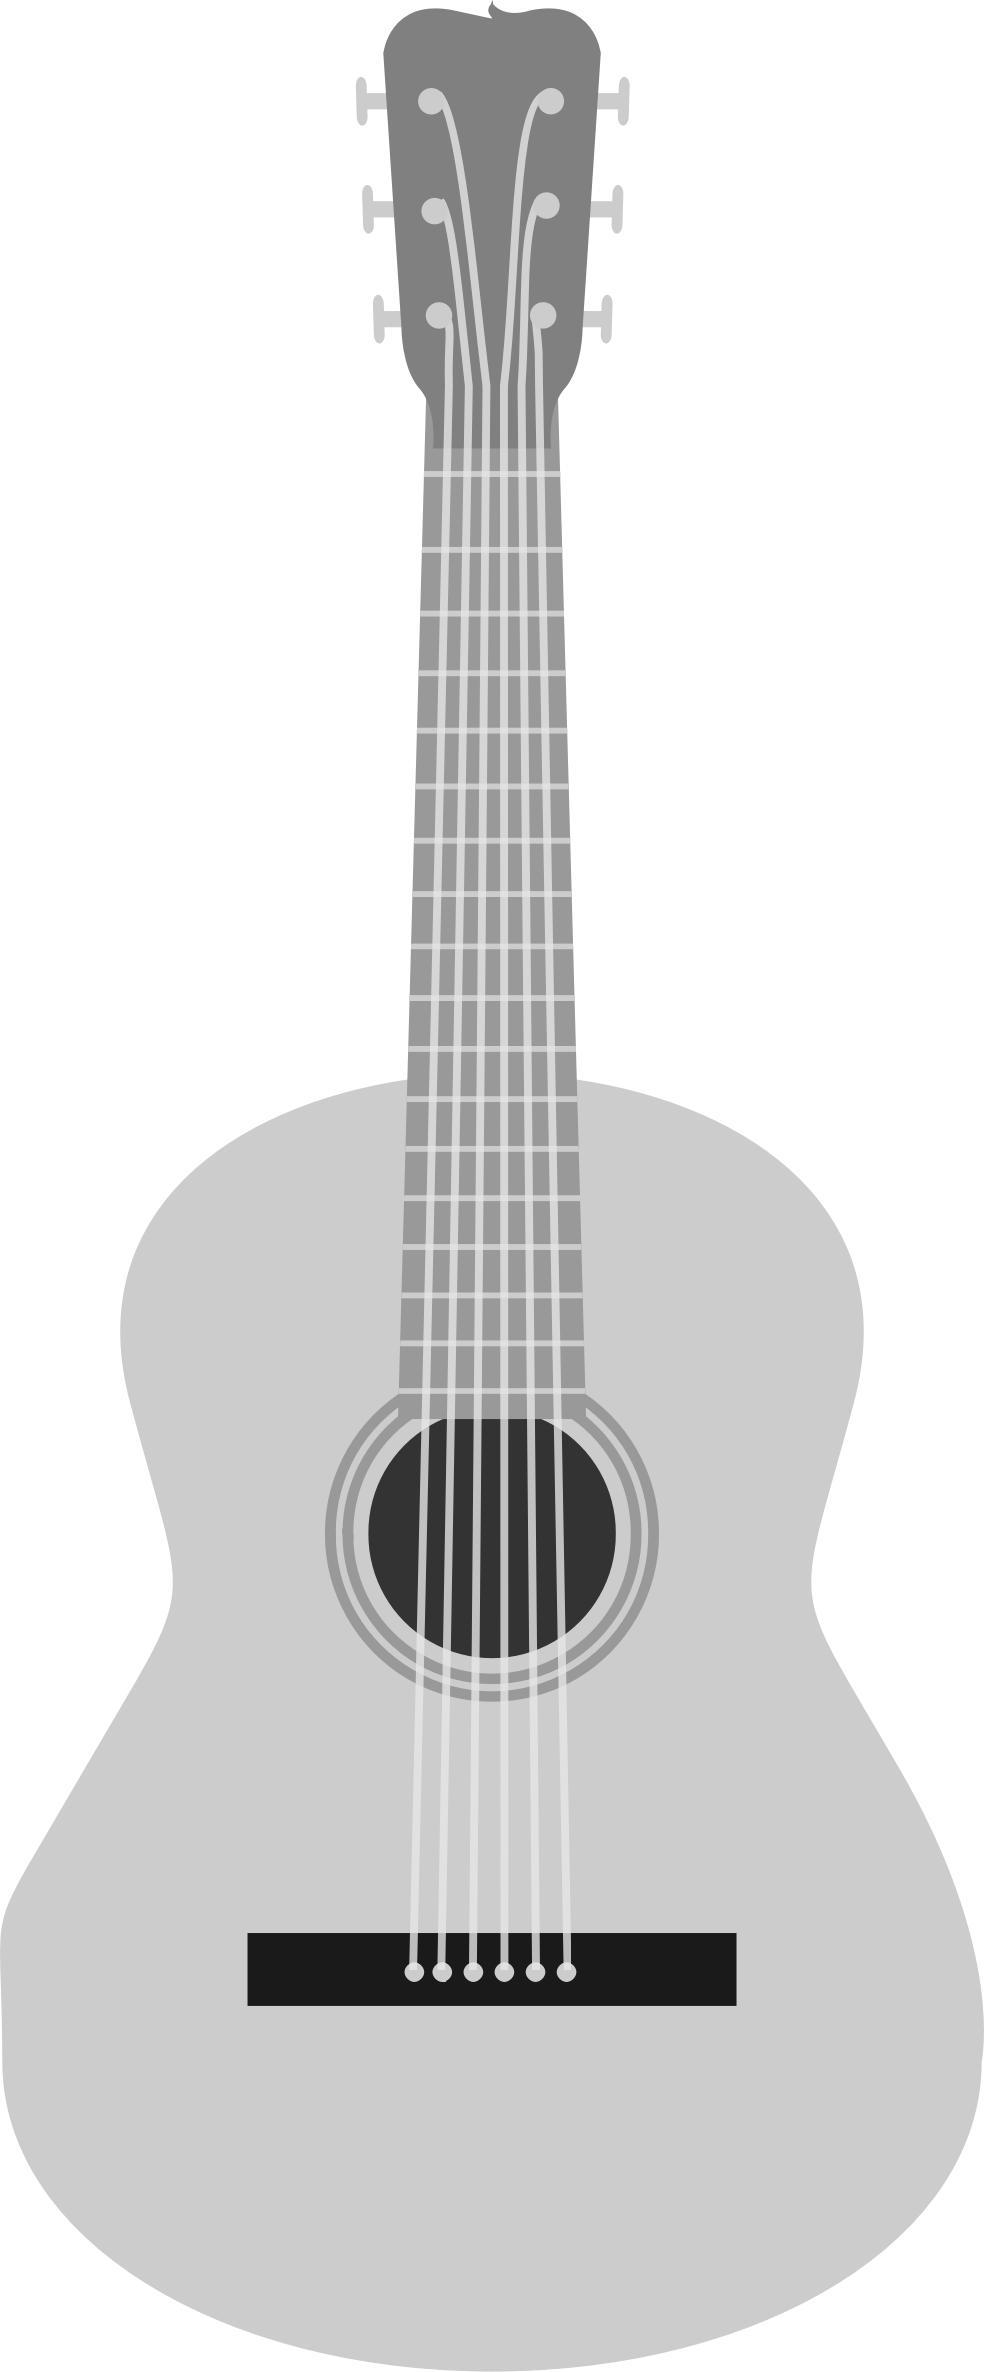 Grayscale acoustic guitar png transparent